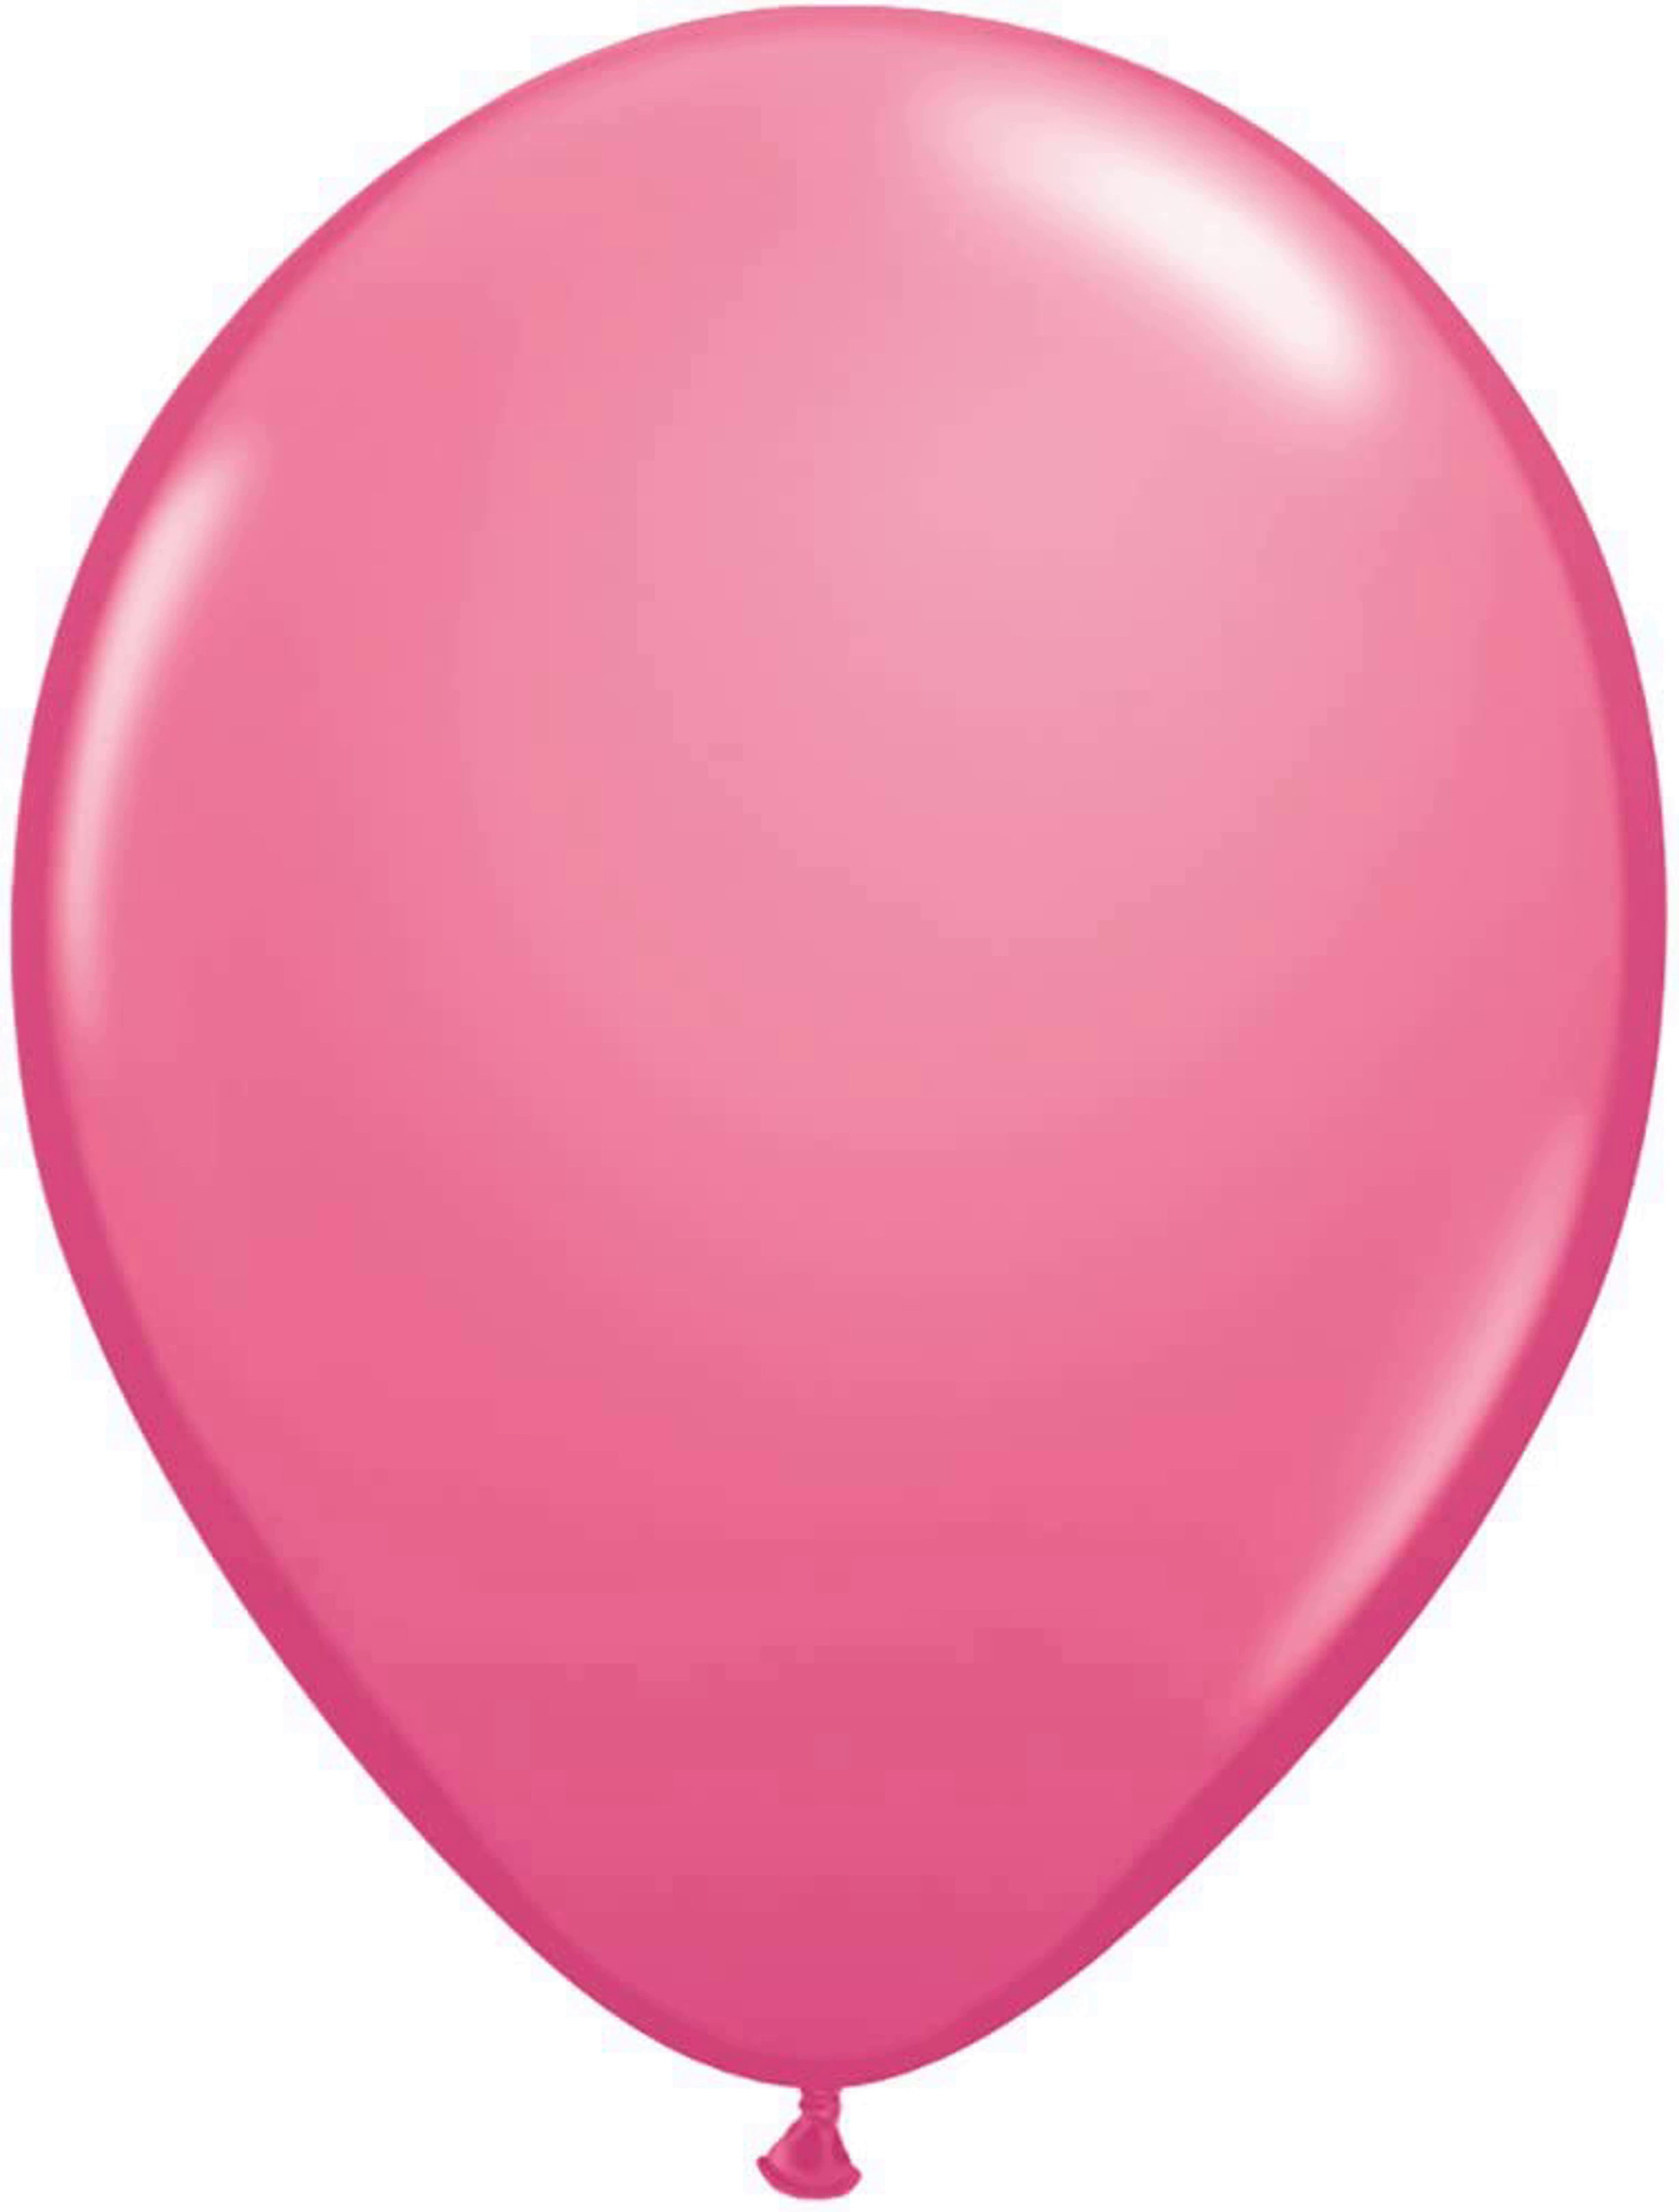 Balloon Fun Strings | Bright Pink | Party Décor, 6